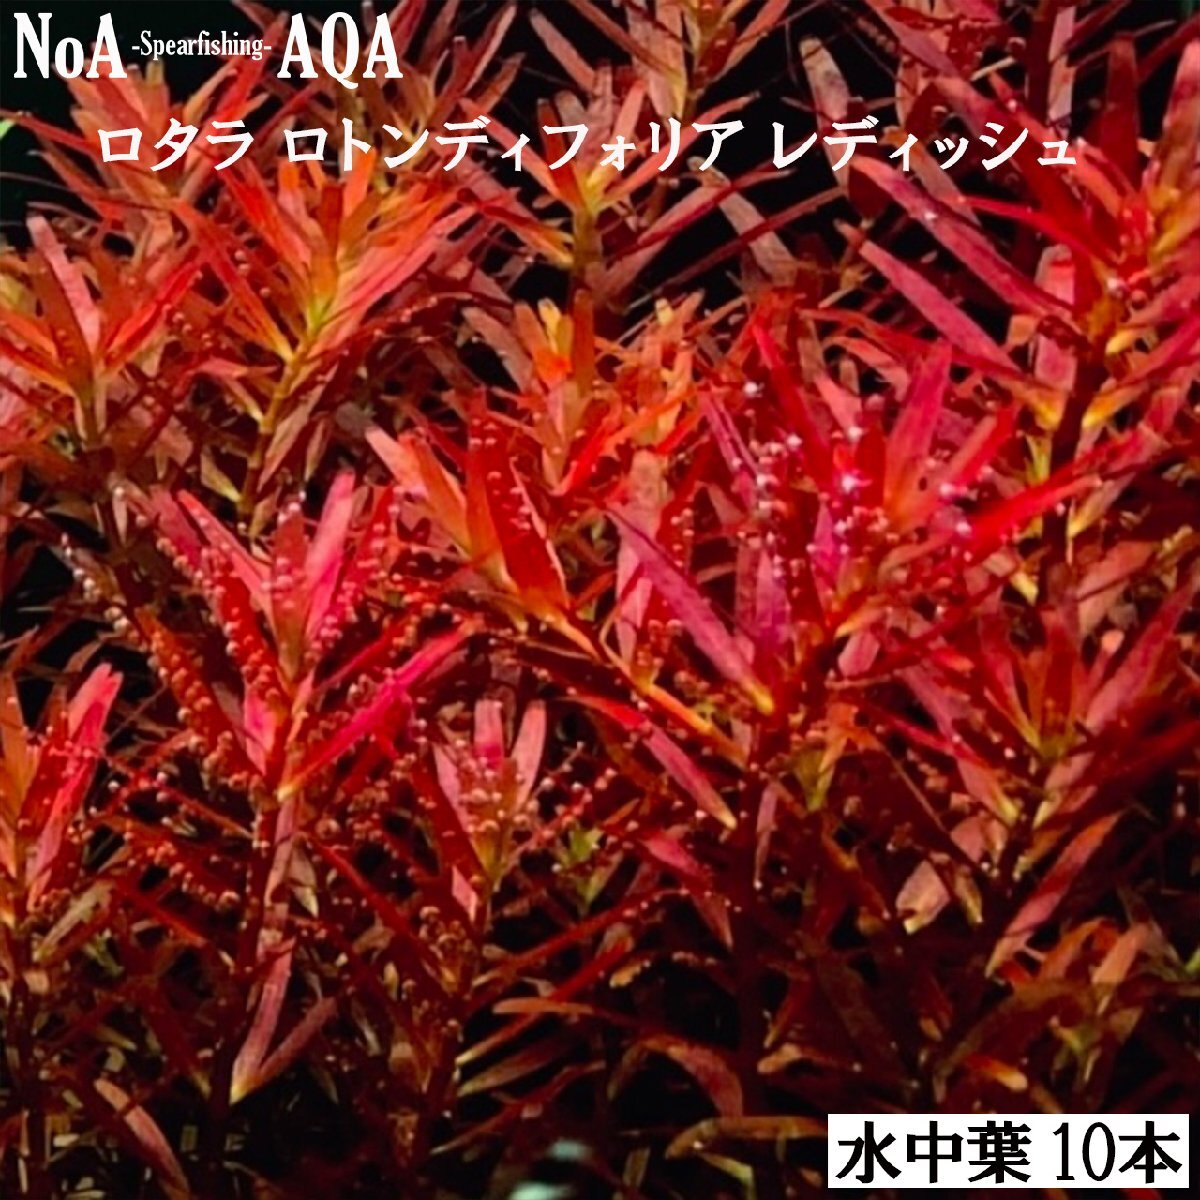 NoA water plants underwater leaf less pesticide ro cod ro ton tifo rear reddish 10ps.@ aquarium aquarium biotope ro ton jifo rear middle .. after ..